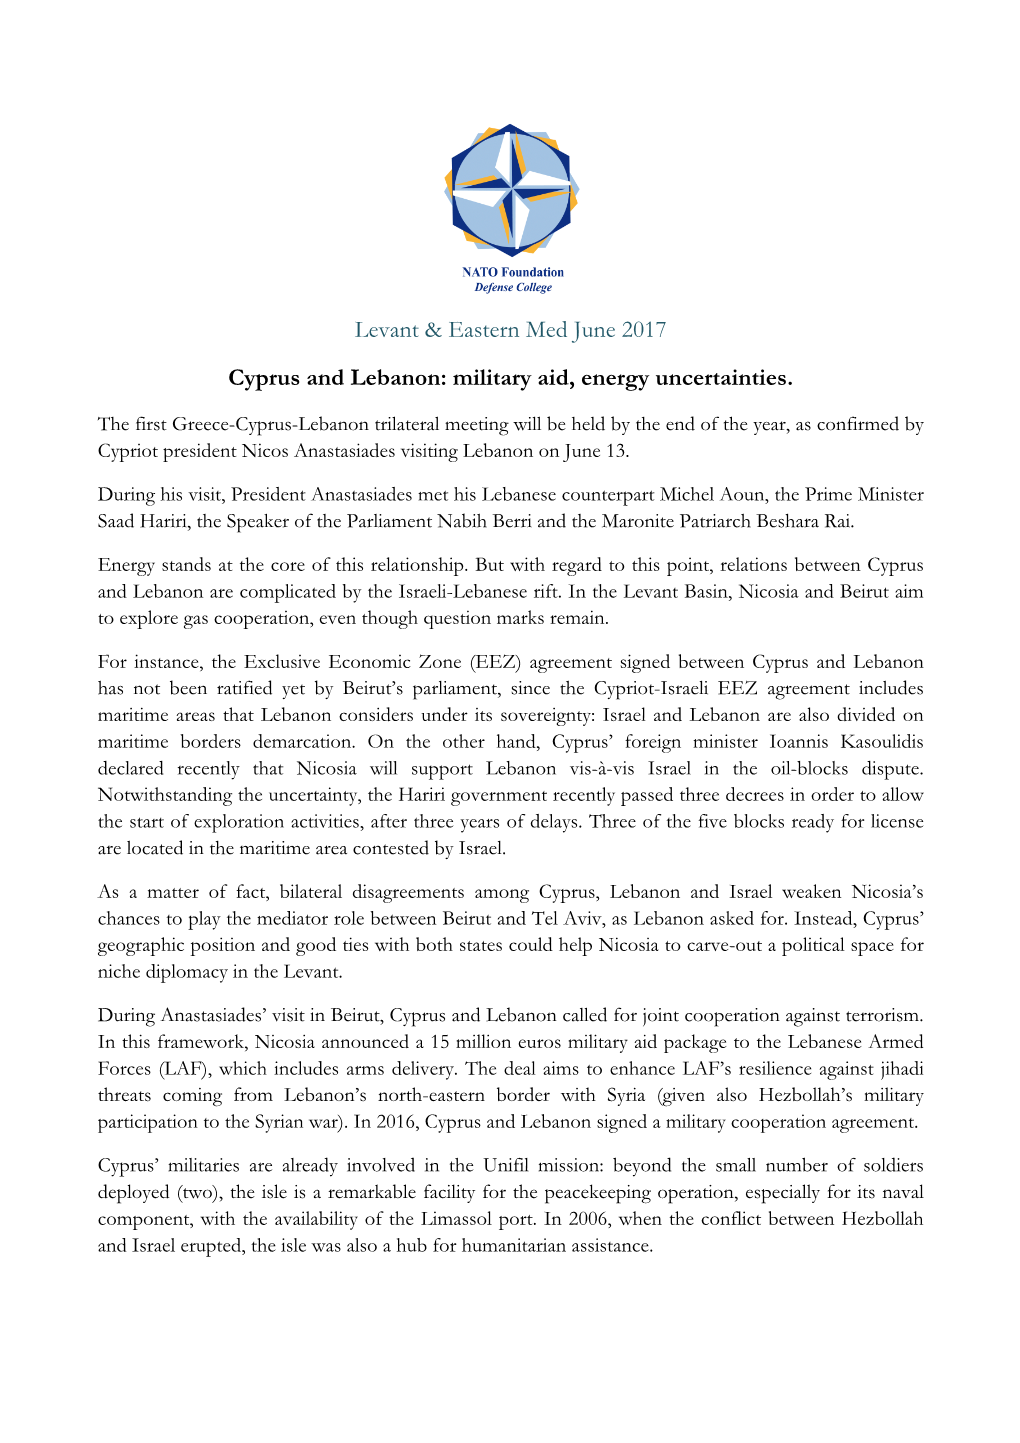 Levant & Eastern Med June 2017 Cyprus and Lebanon: Military Aid, Energy Uncertainties